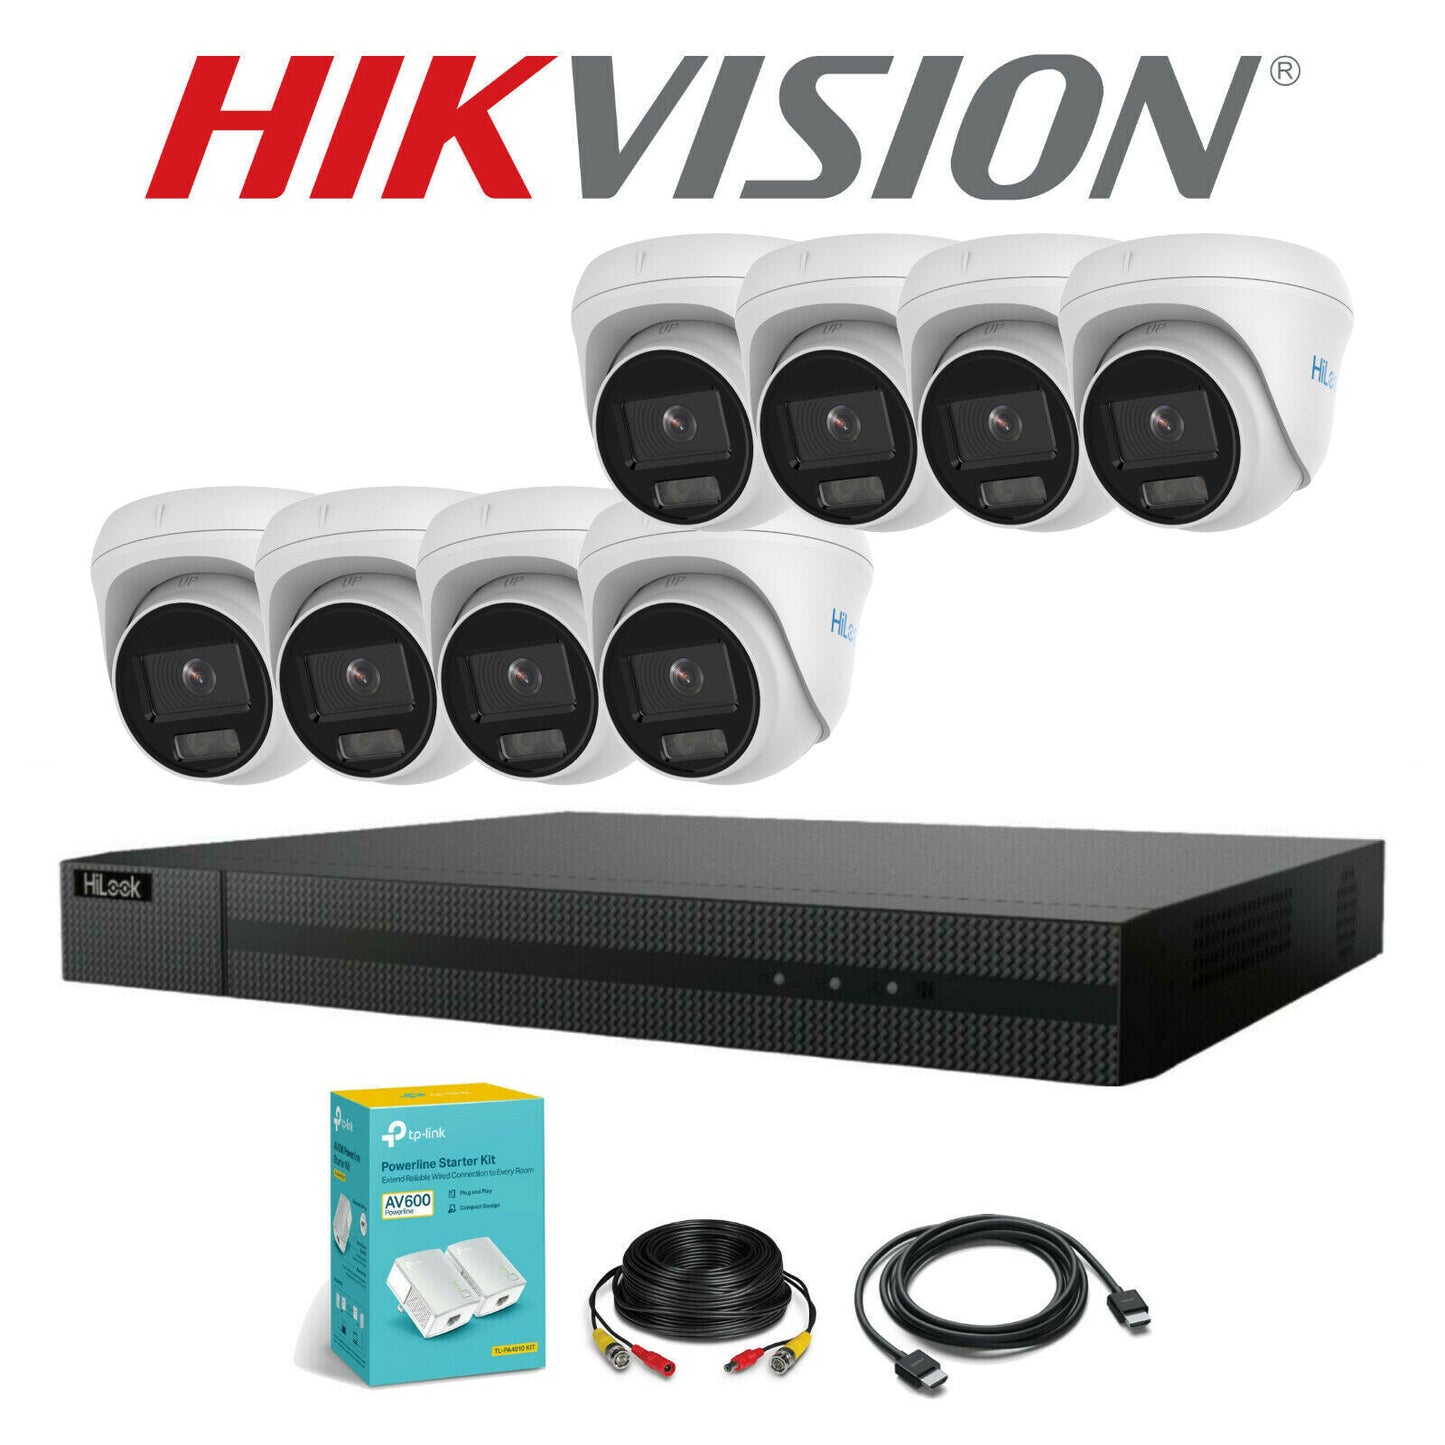 HIKVISION COLORVU POE CCTV SYSTEM IP UHD 8MP NVR 4K 5MP 24/7 COLORVU CAMERA KIT 8CH NVR 8x Cameras 6TB HDD